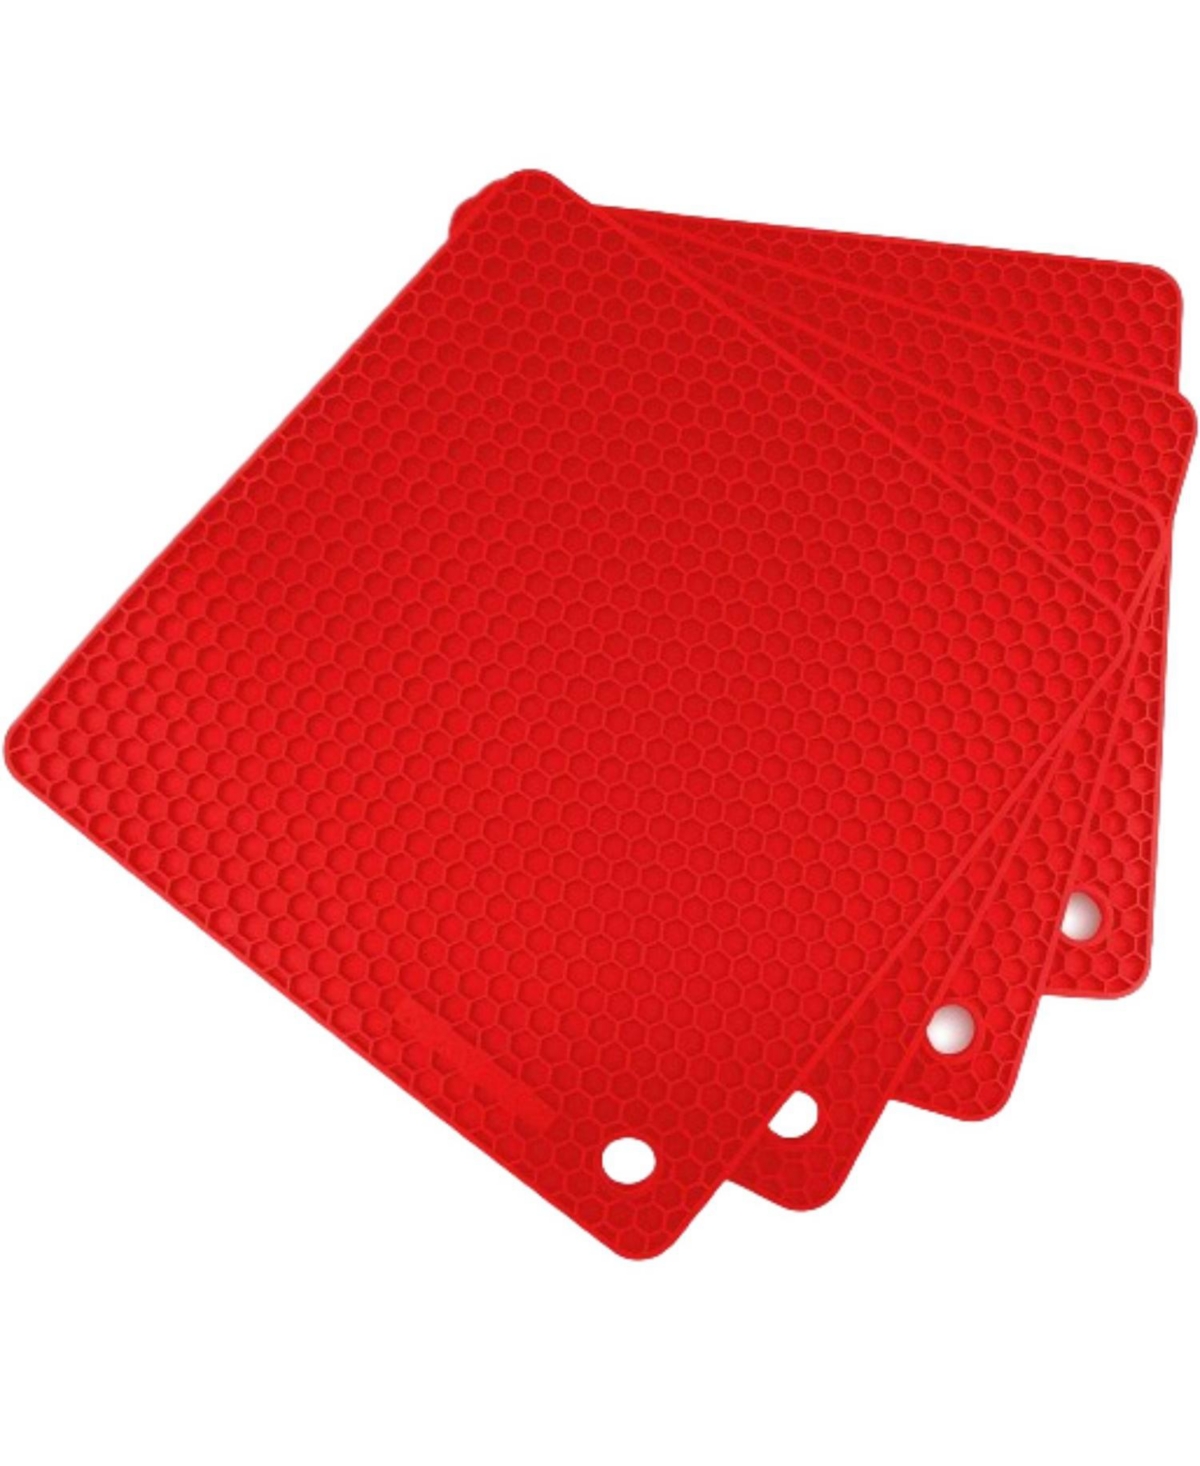 4 Pack Non-Slip Silicone Trivet Mat Set - Red